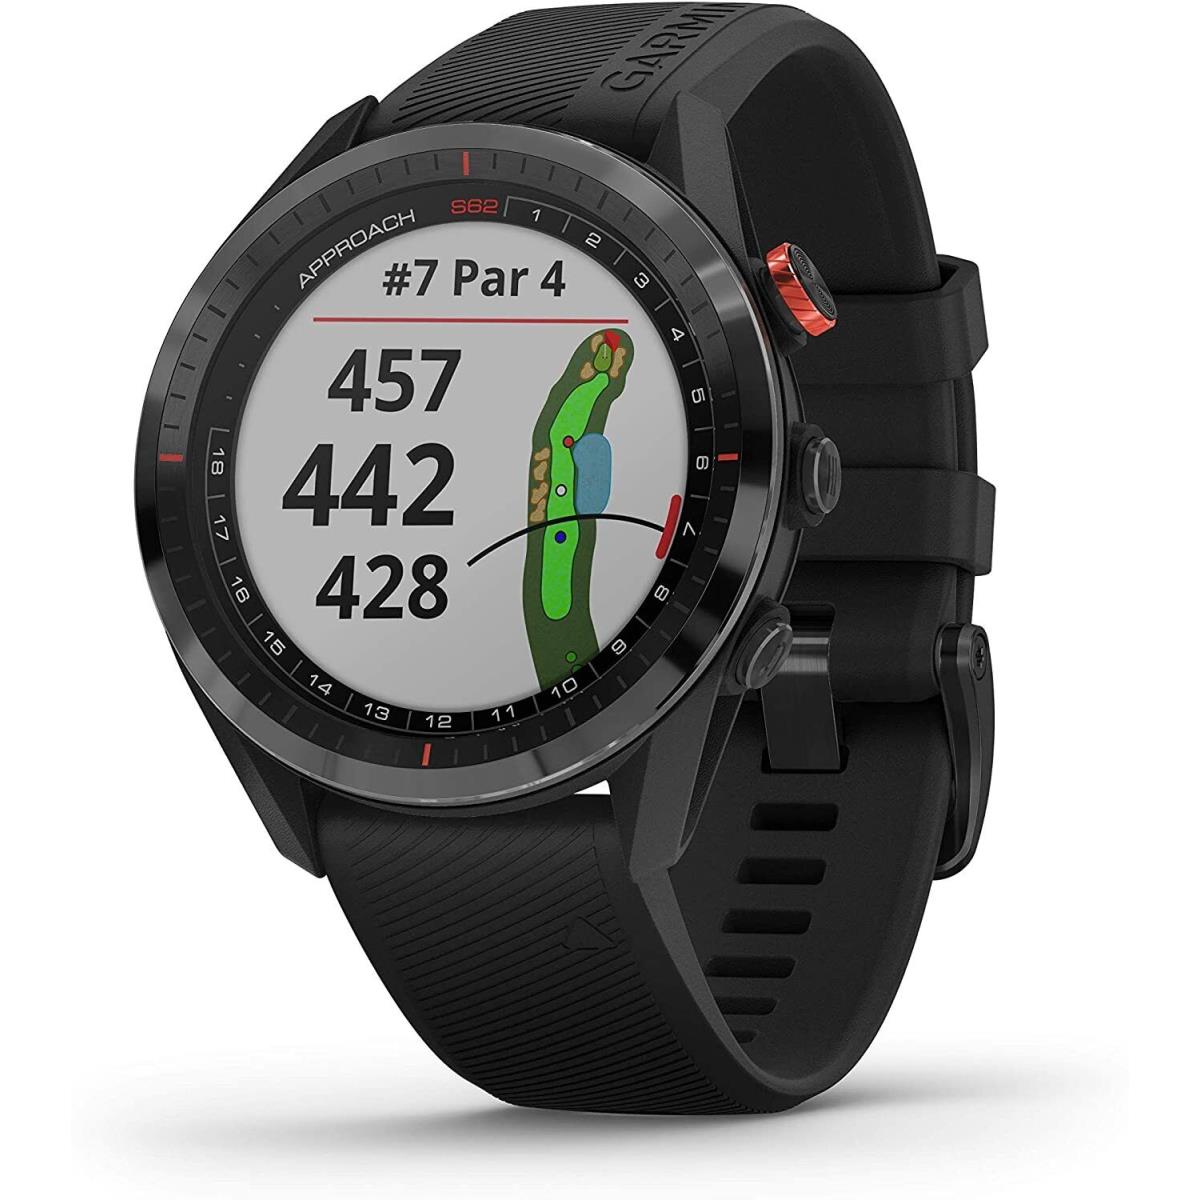 Garmin Approach S62 Premium Golf Watch Gps Virtual Caddie Suggests Black - Black